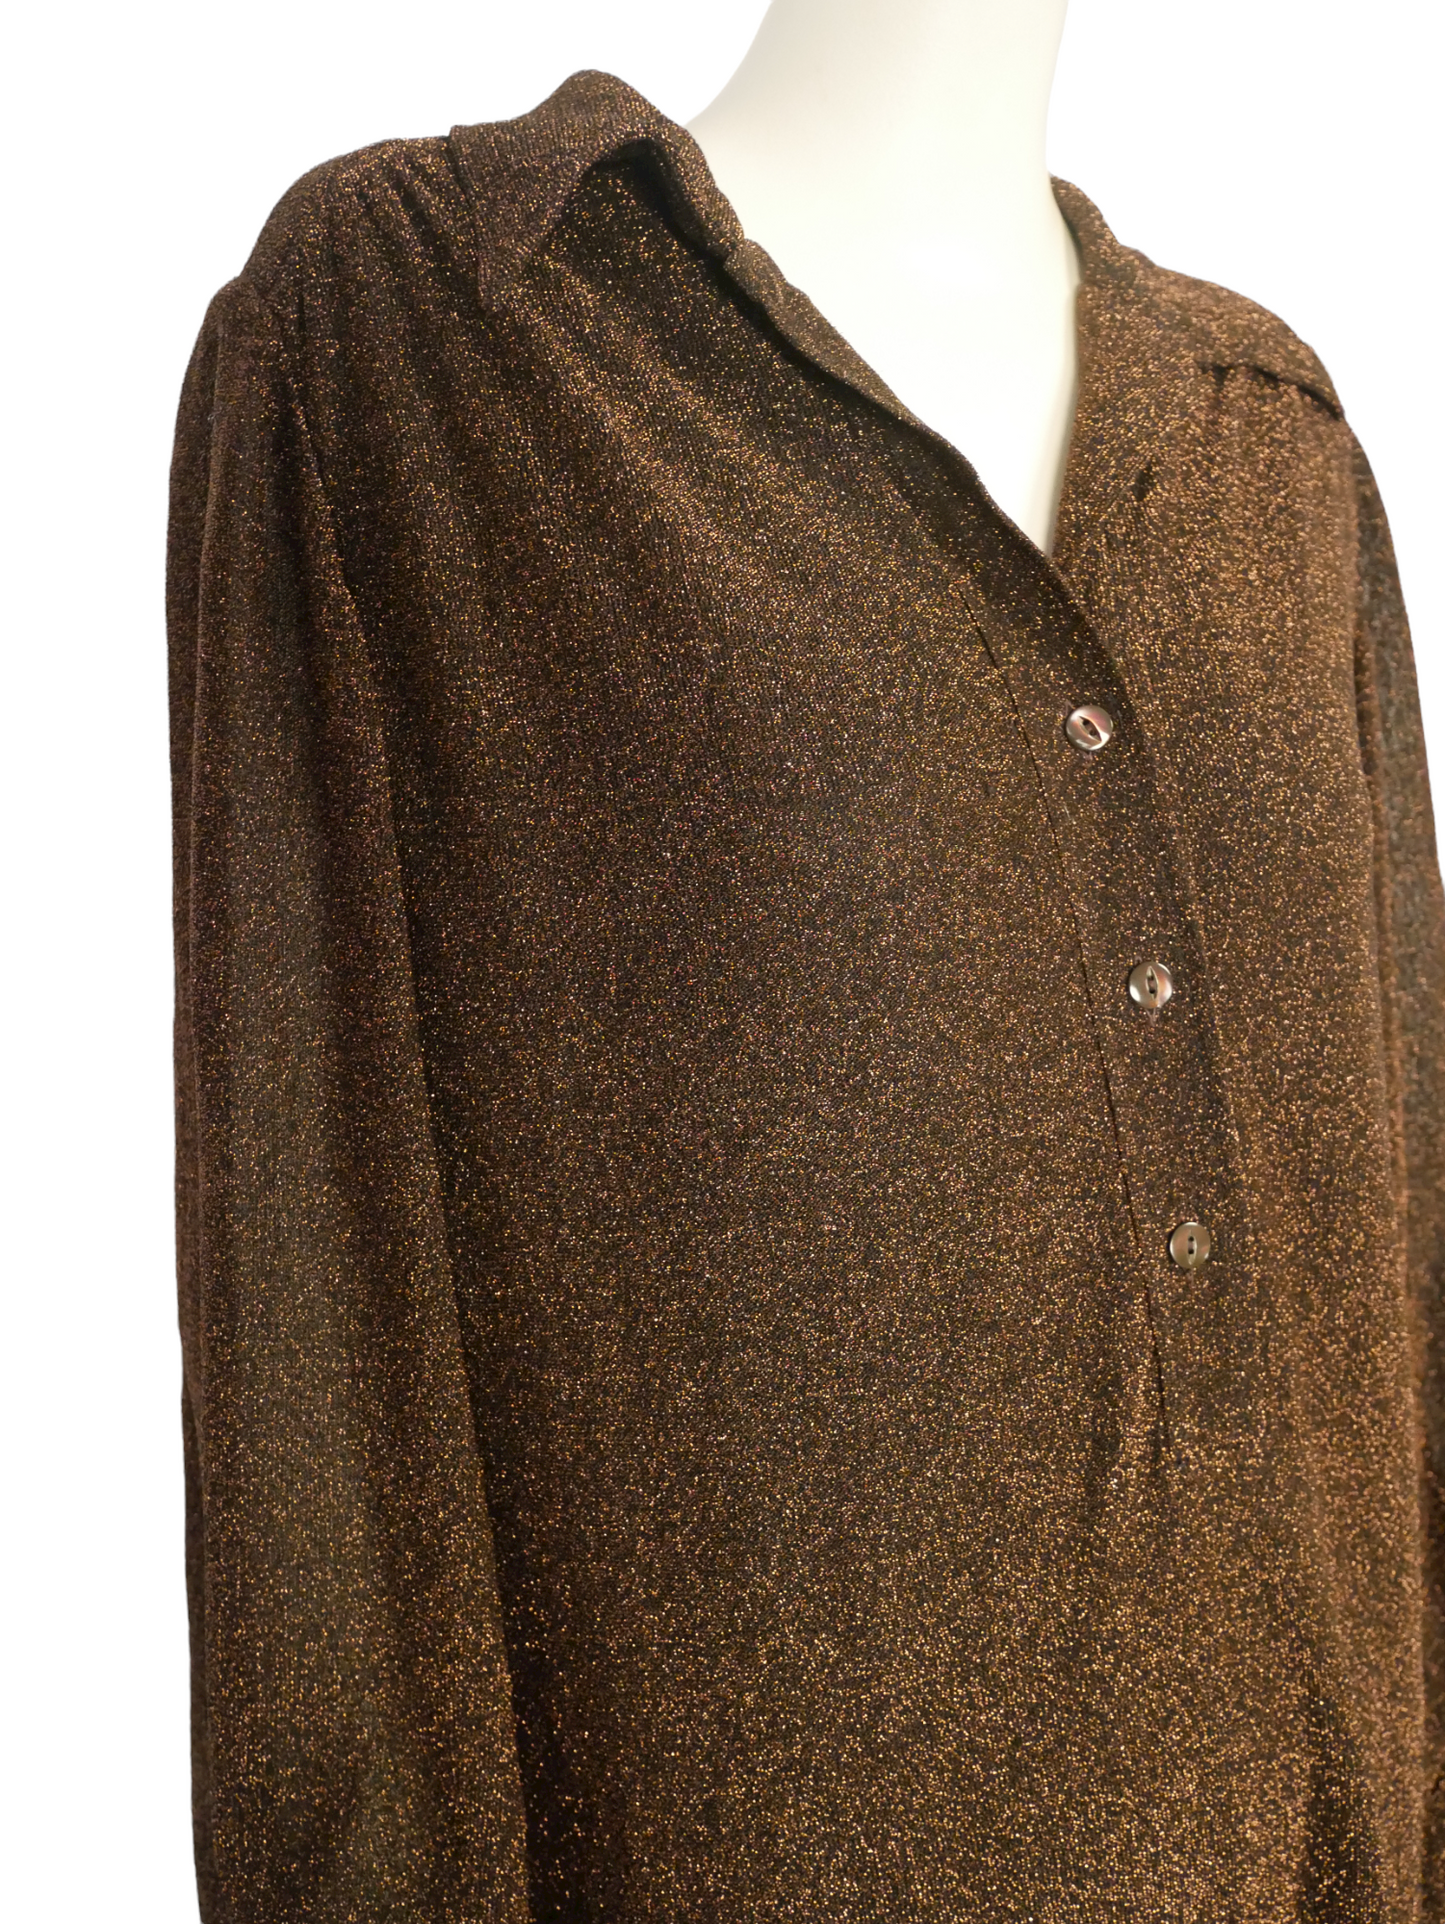 Guy Laroche copper lurex vintage dress - M - 1980s